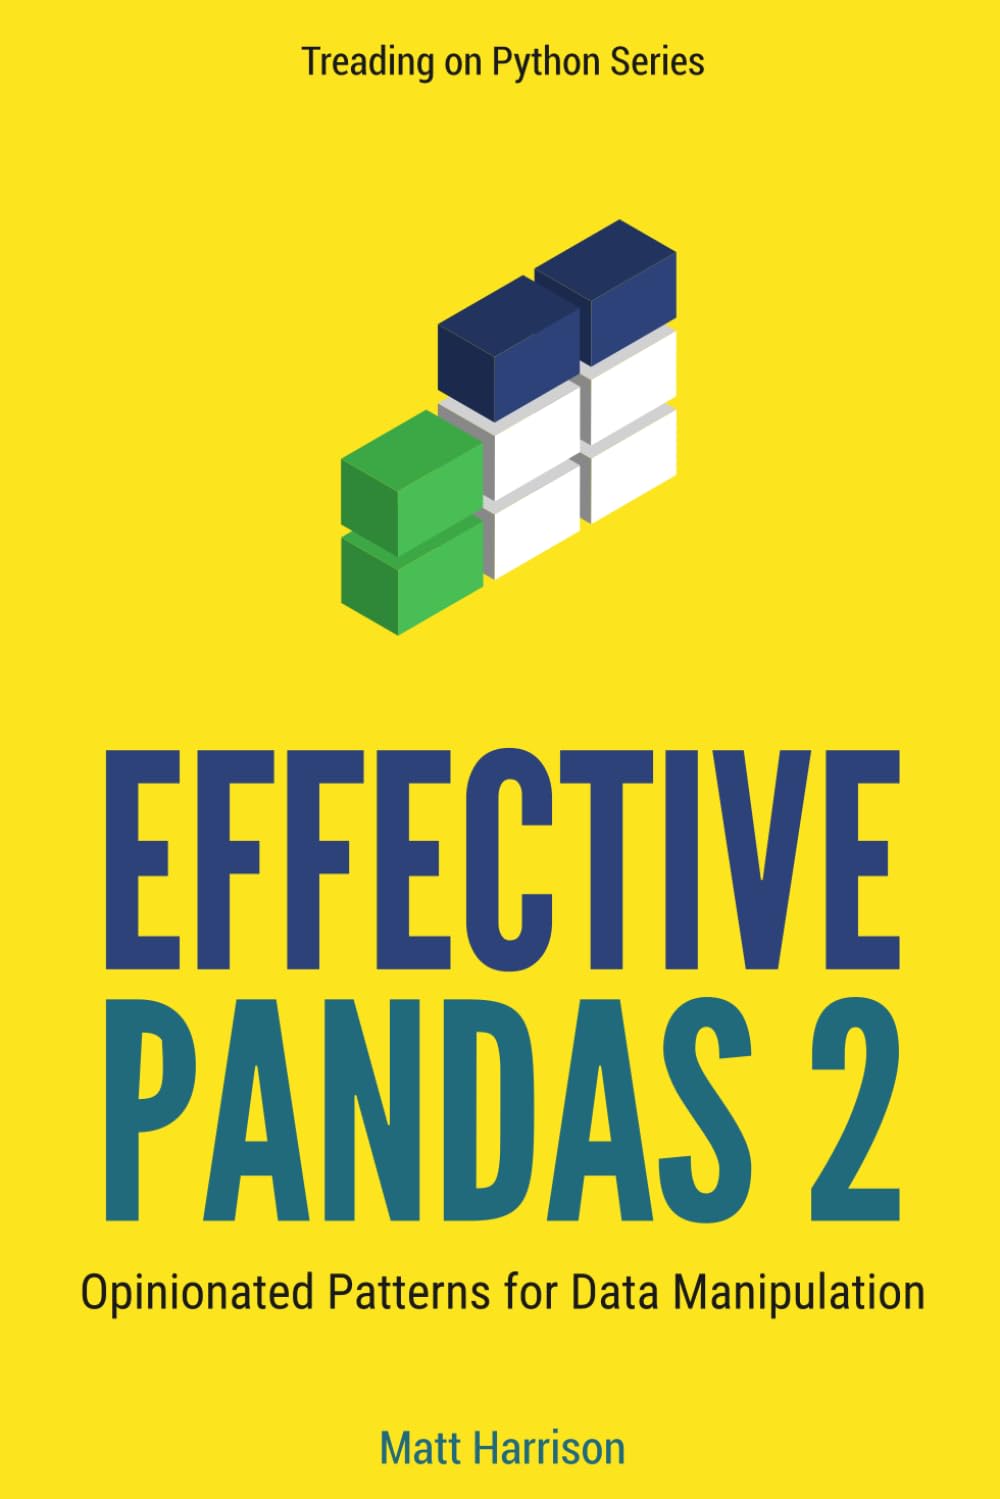 Effective Pandas 2: Opinionated Patterns for Data Manipulation (Treading on Python)